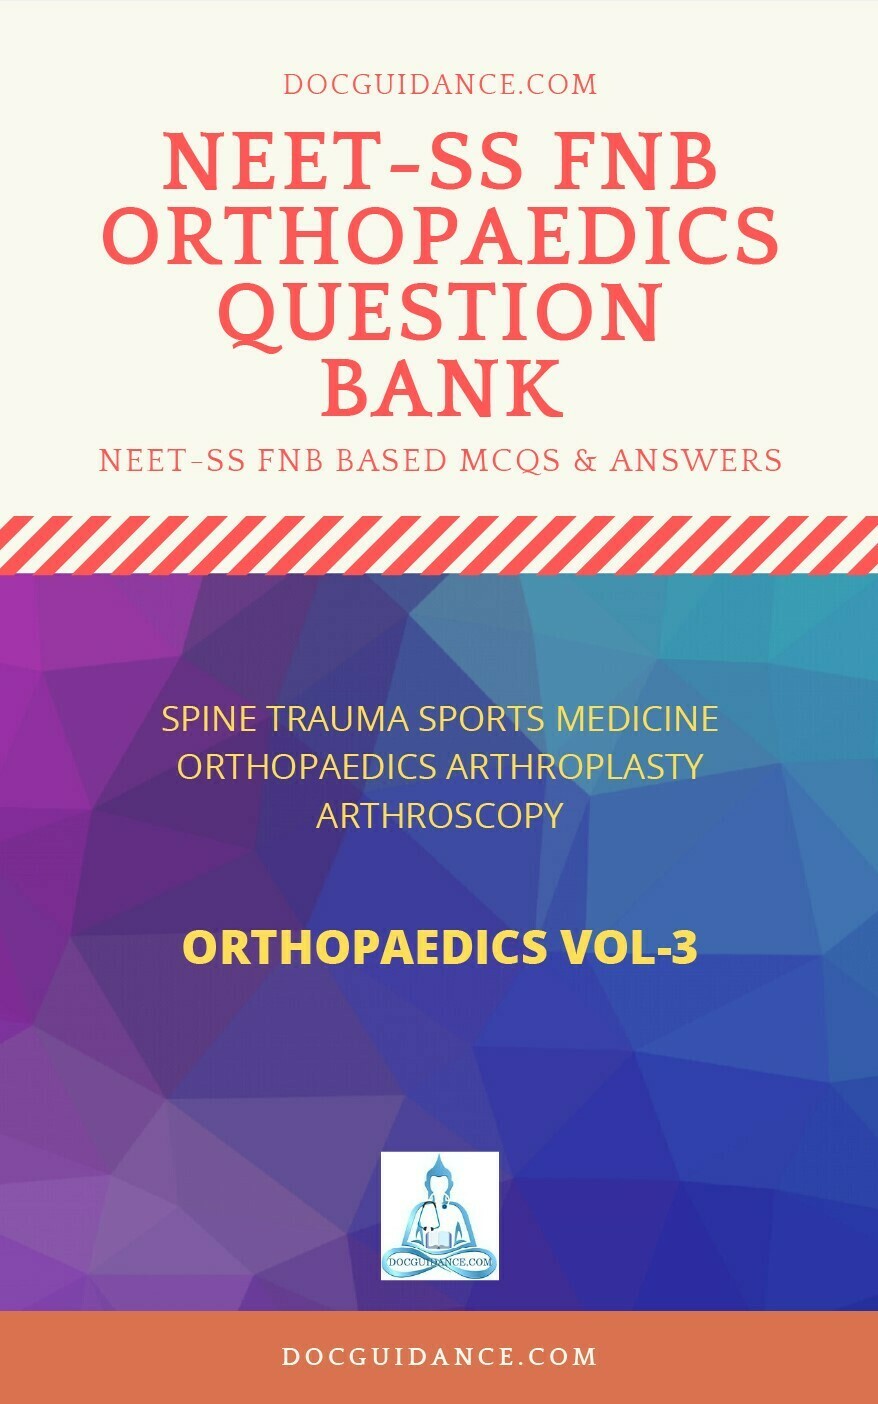 FNB FET NEET SS Questionbank Spine Trauma Sports Medicine hand Vol 3